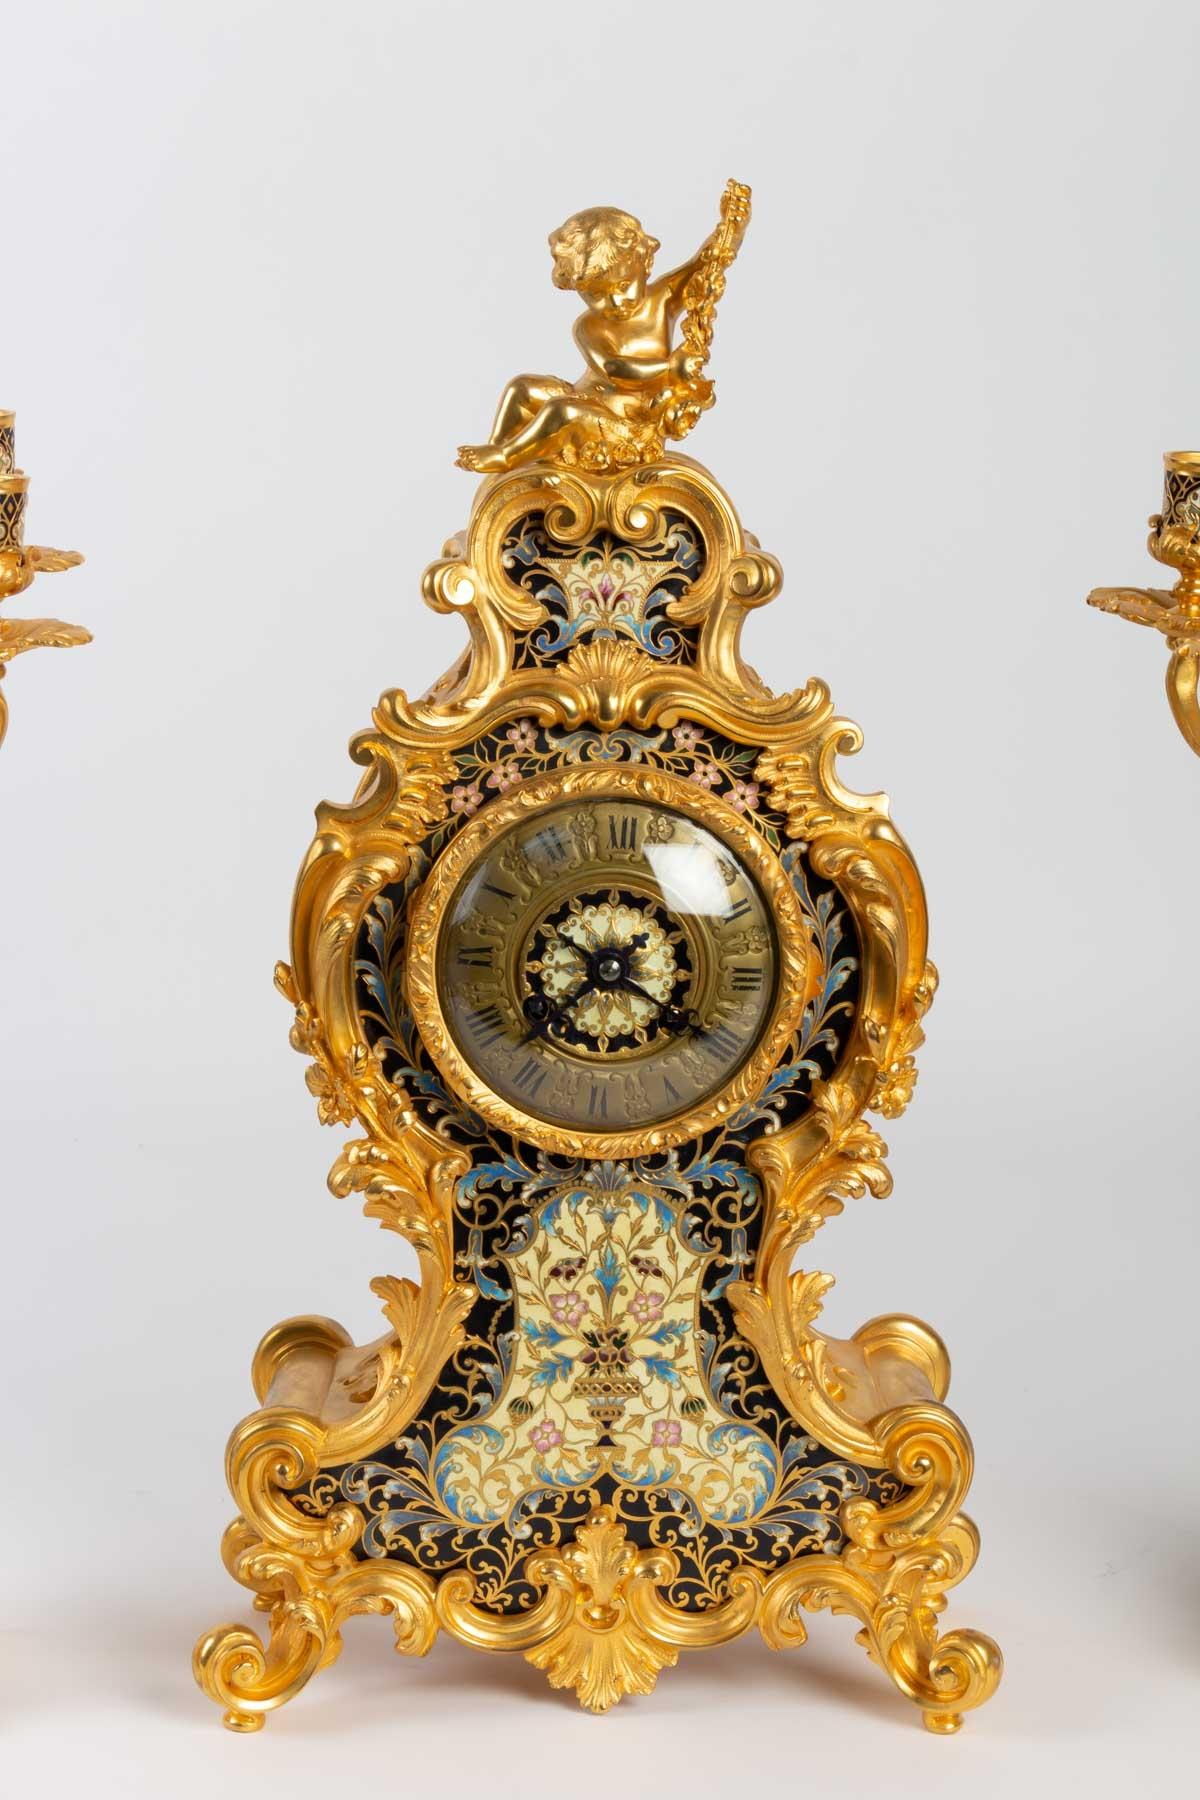 Mantel clock, 19th century, gilded bronze, enameled and cloisonné, Napoleon III
Pendulum: Height 50cm, width 26cm
Candelabra: Height 50cm, width 13cm.